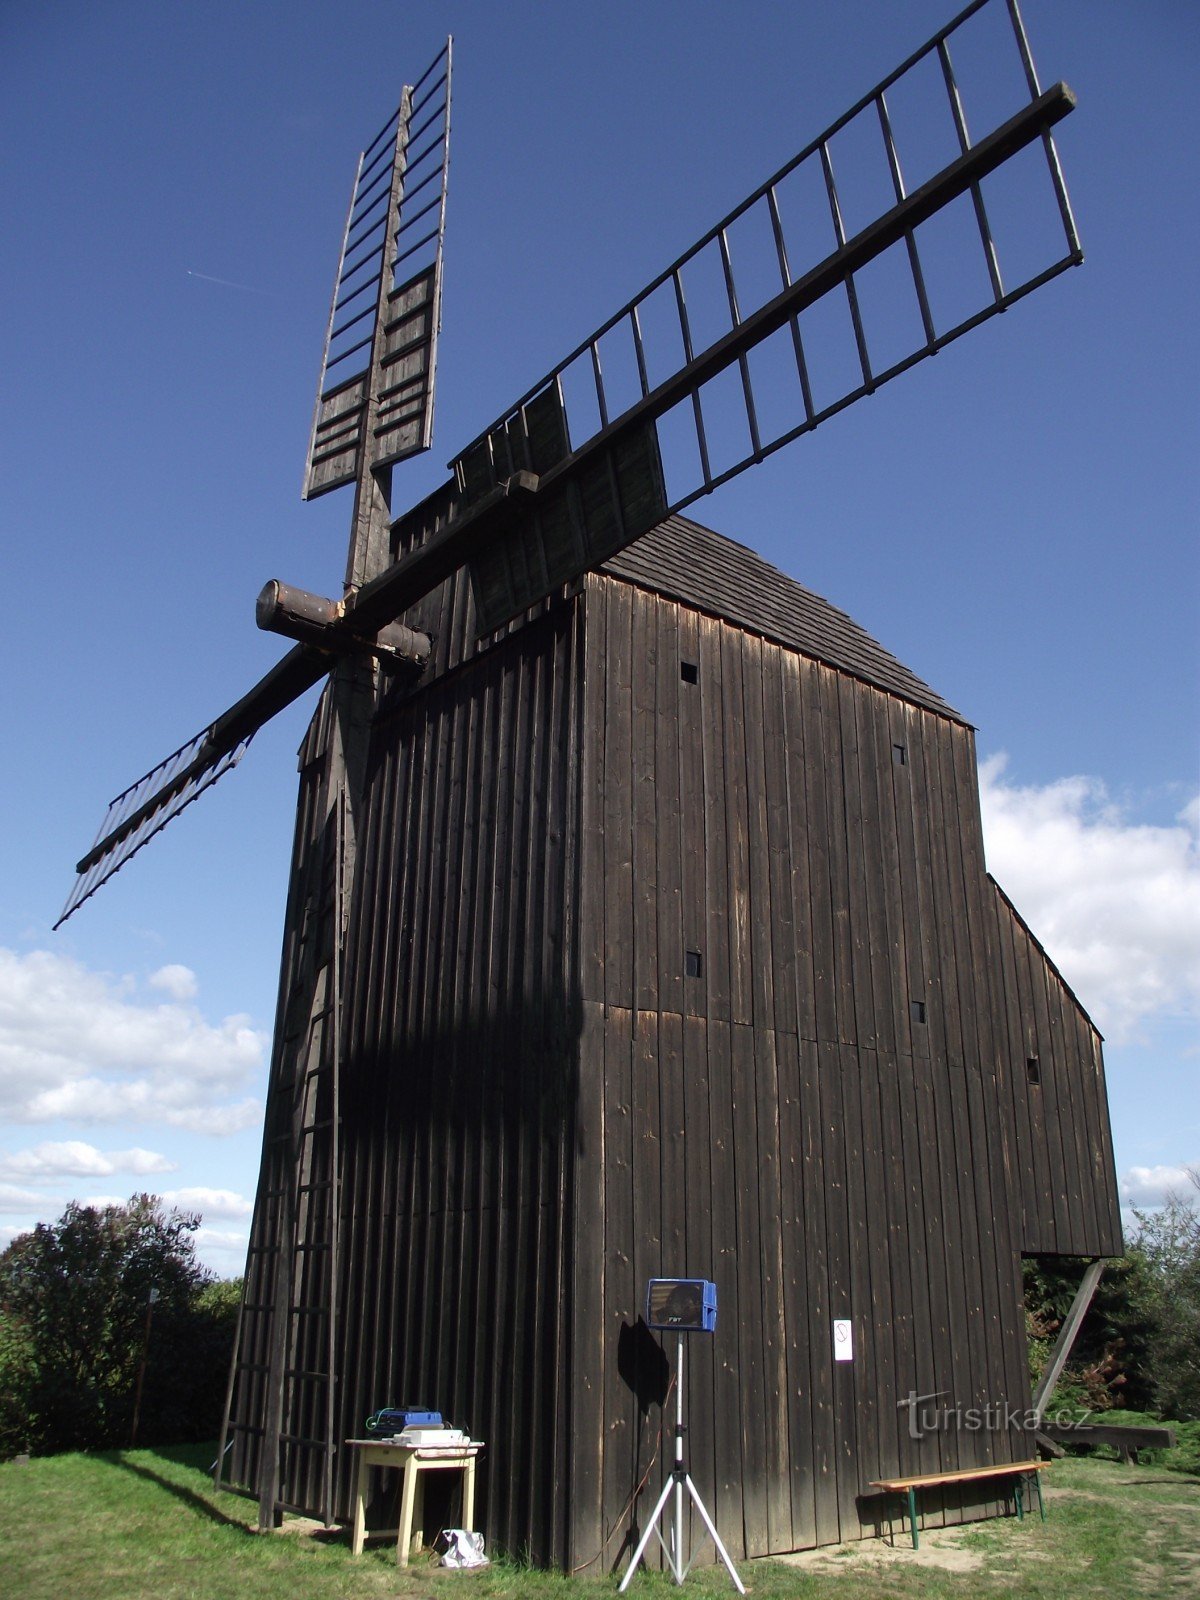 Hats near Brno – a wooden windmill